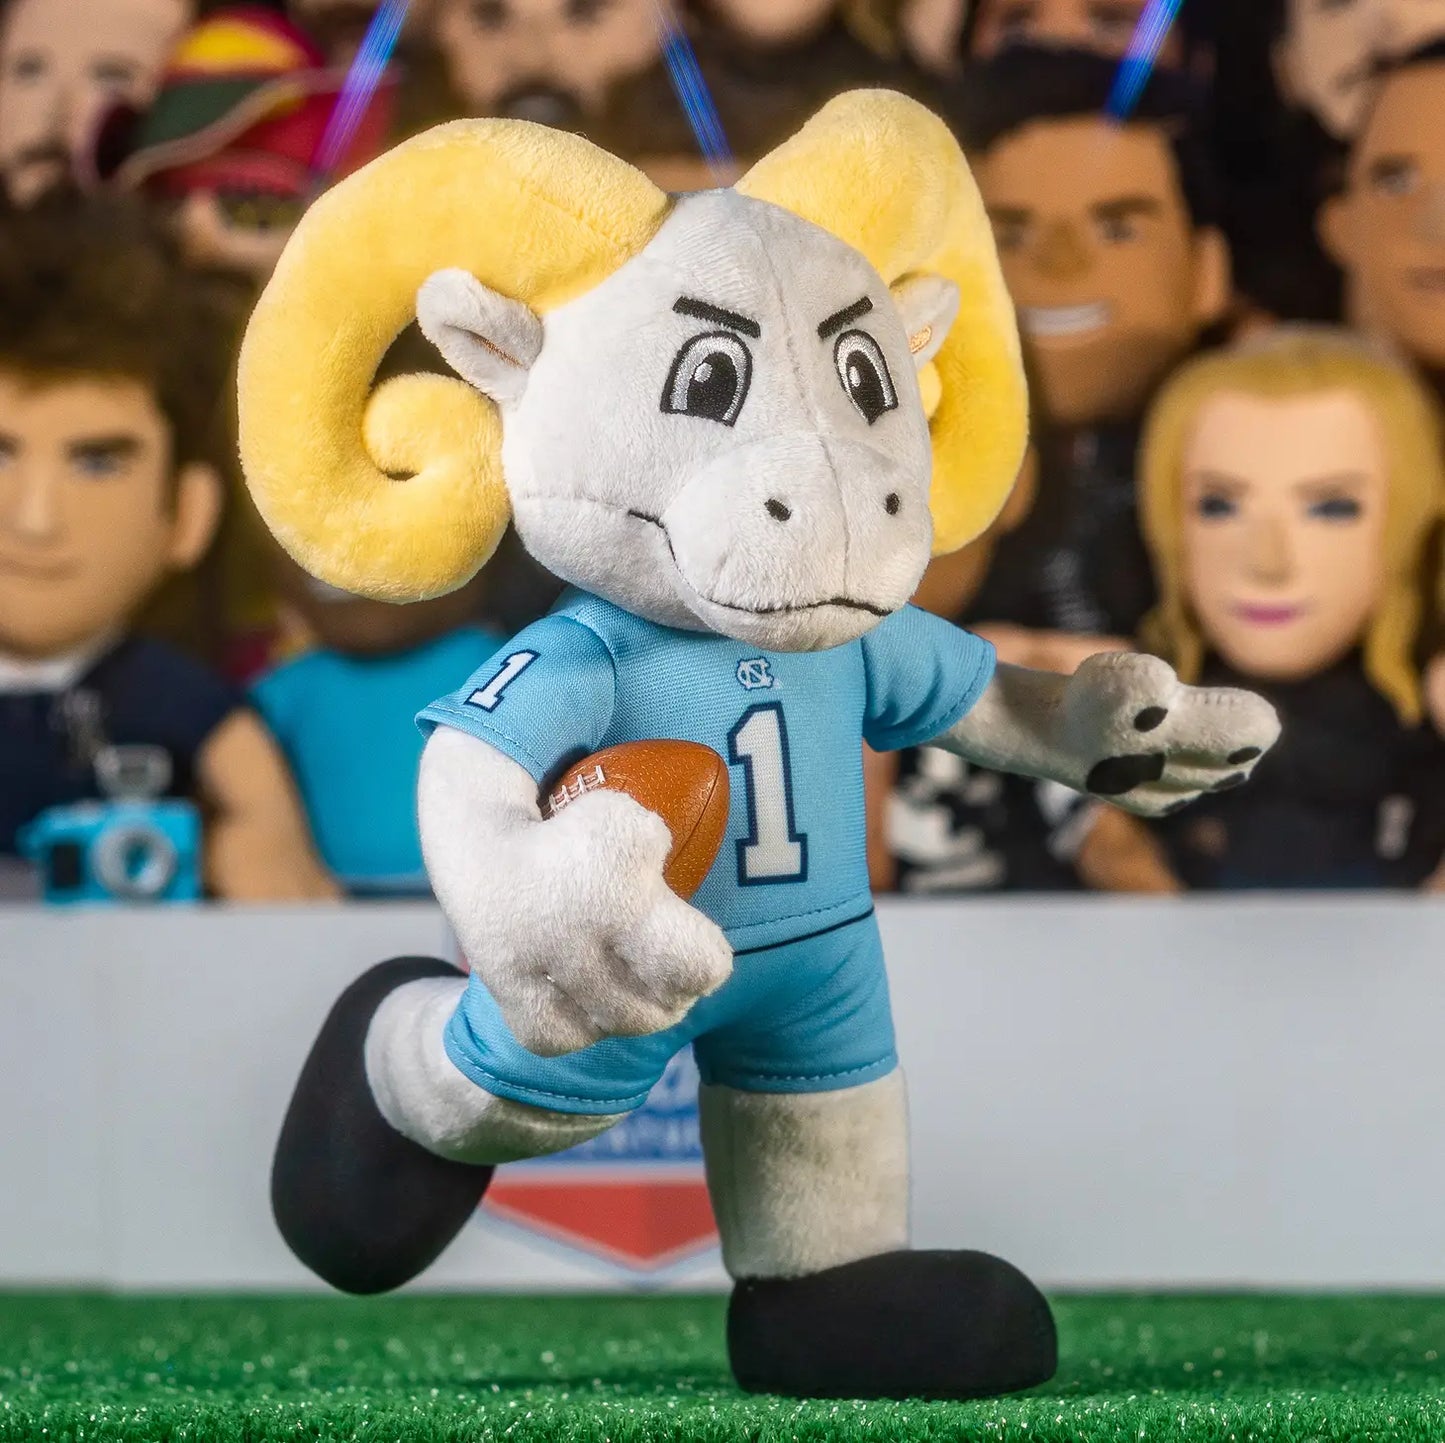 UNC Rameses Stuffed Animal Plush Mascot in ACC Football Uniform